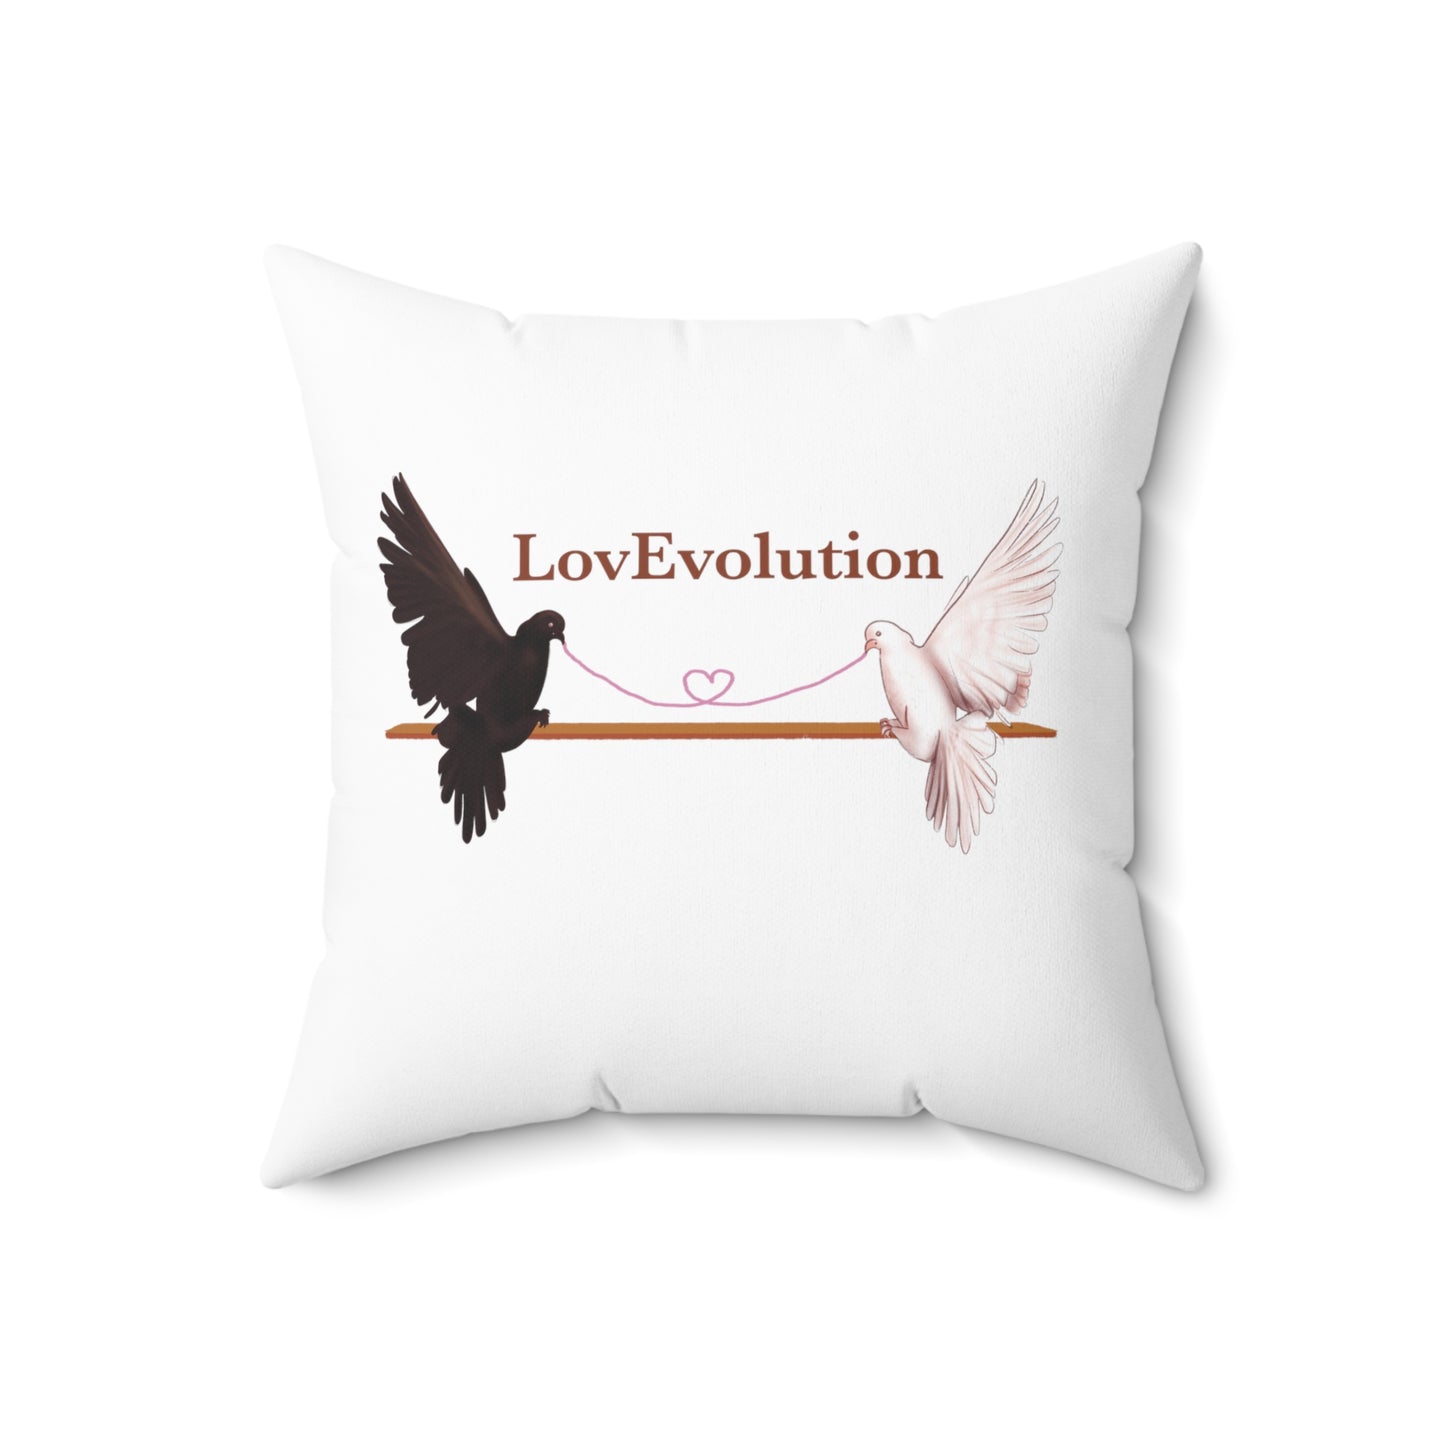 LovEvolution_Spun Polyester Square Pillow